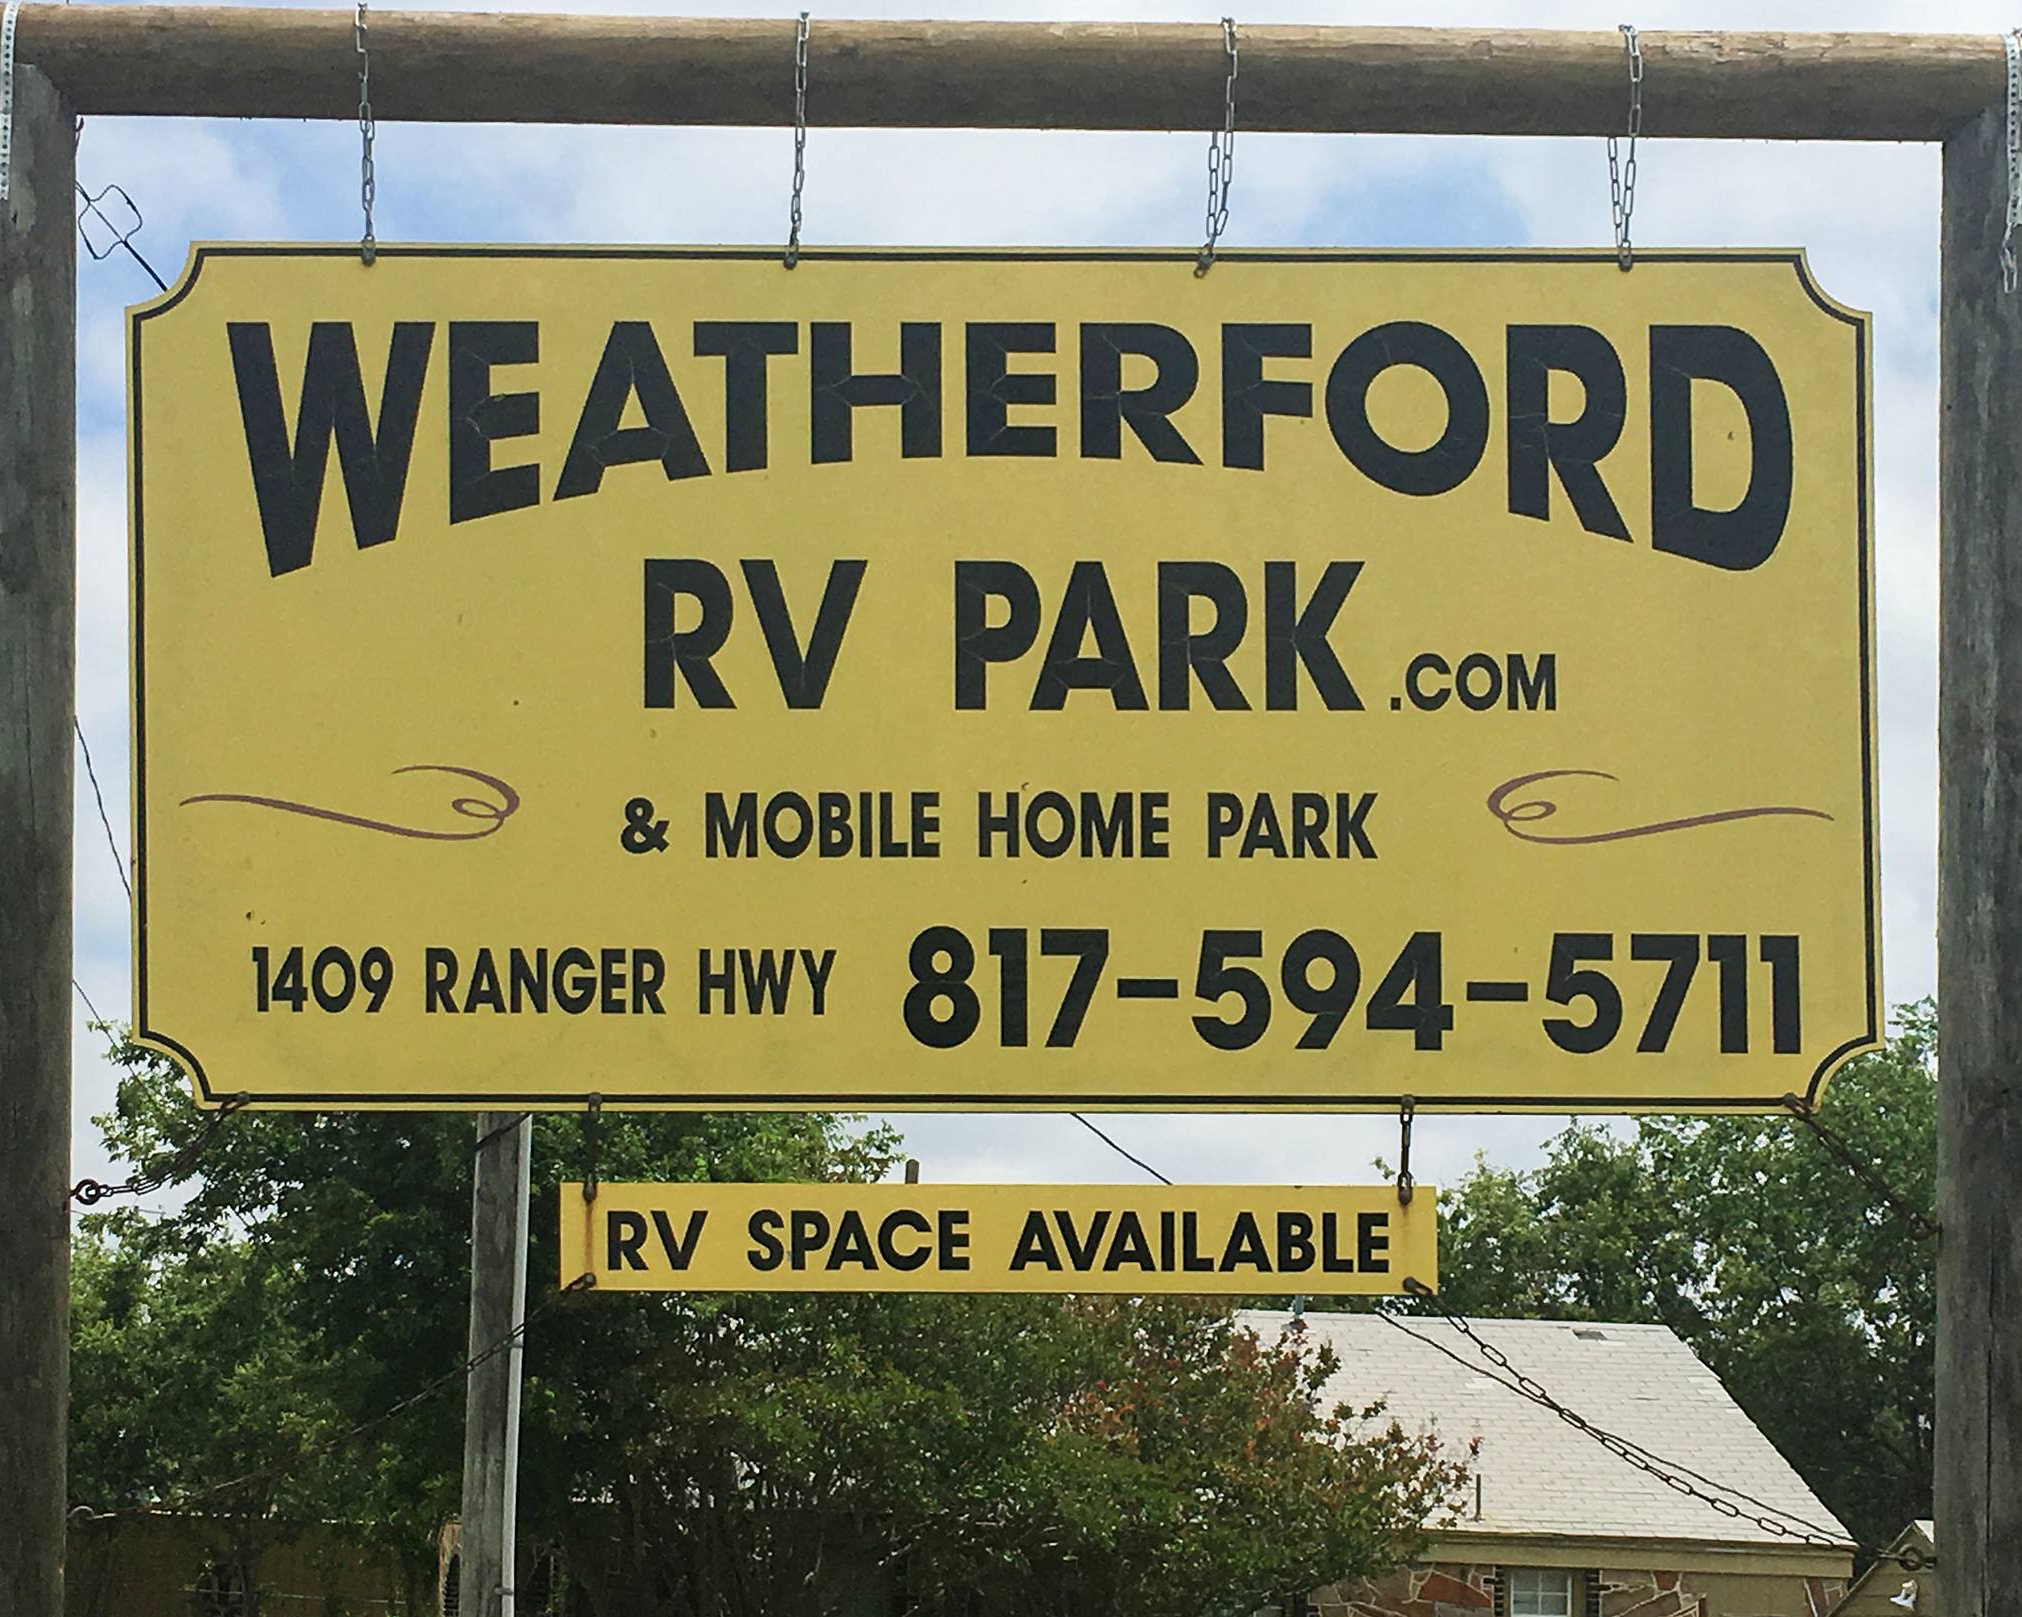 Weatherford RV Park sign